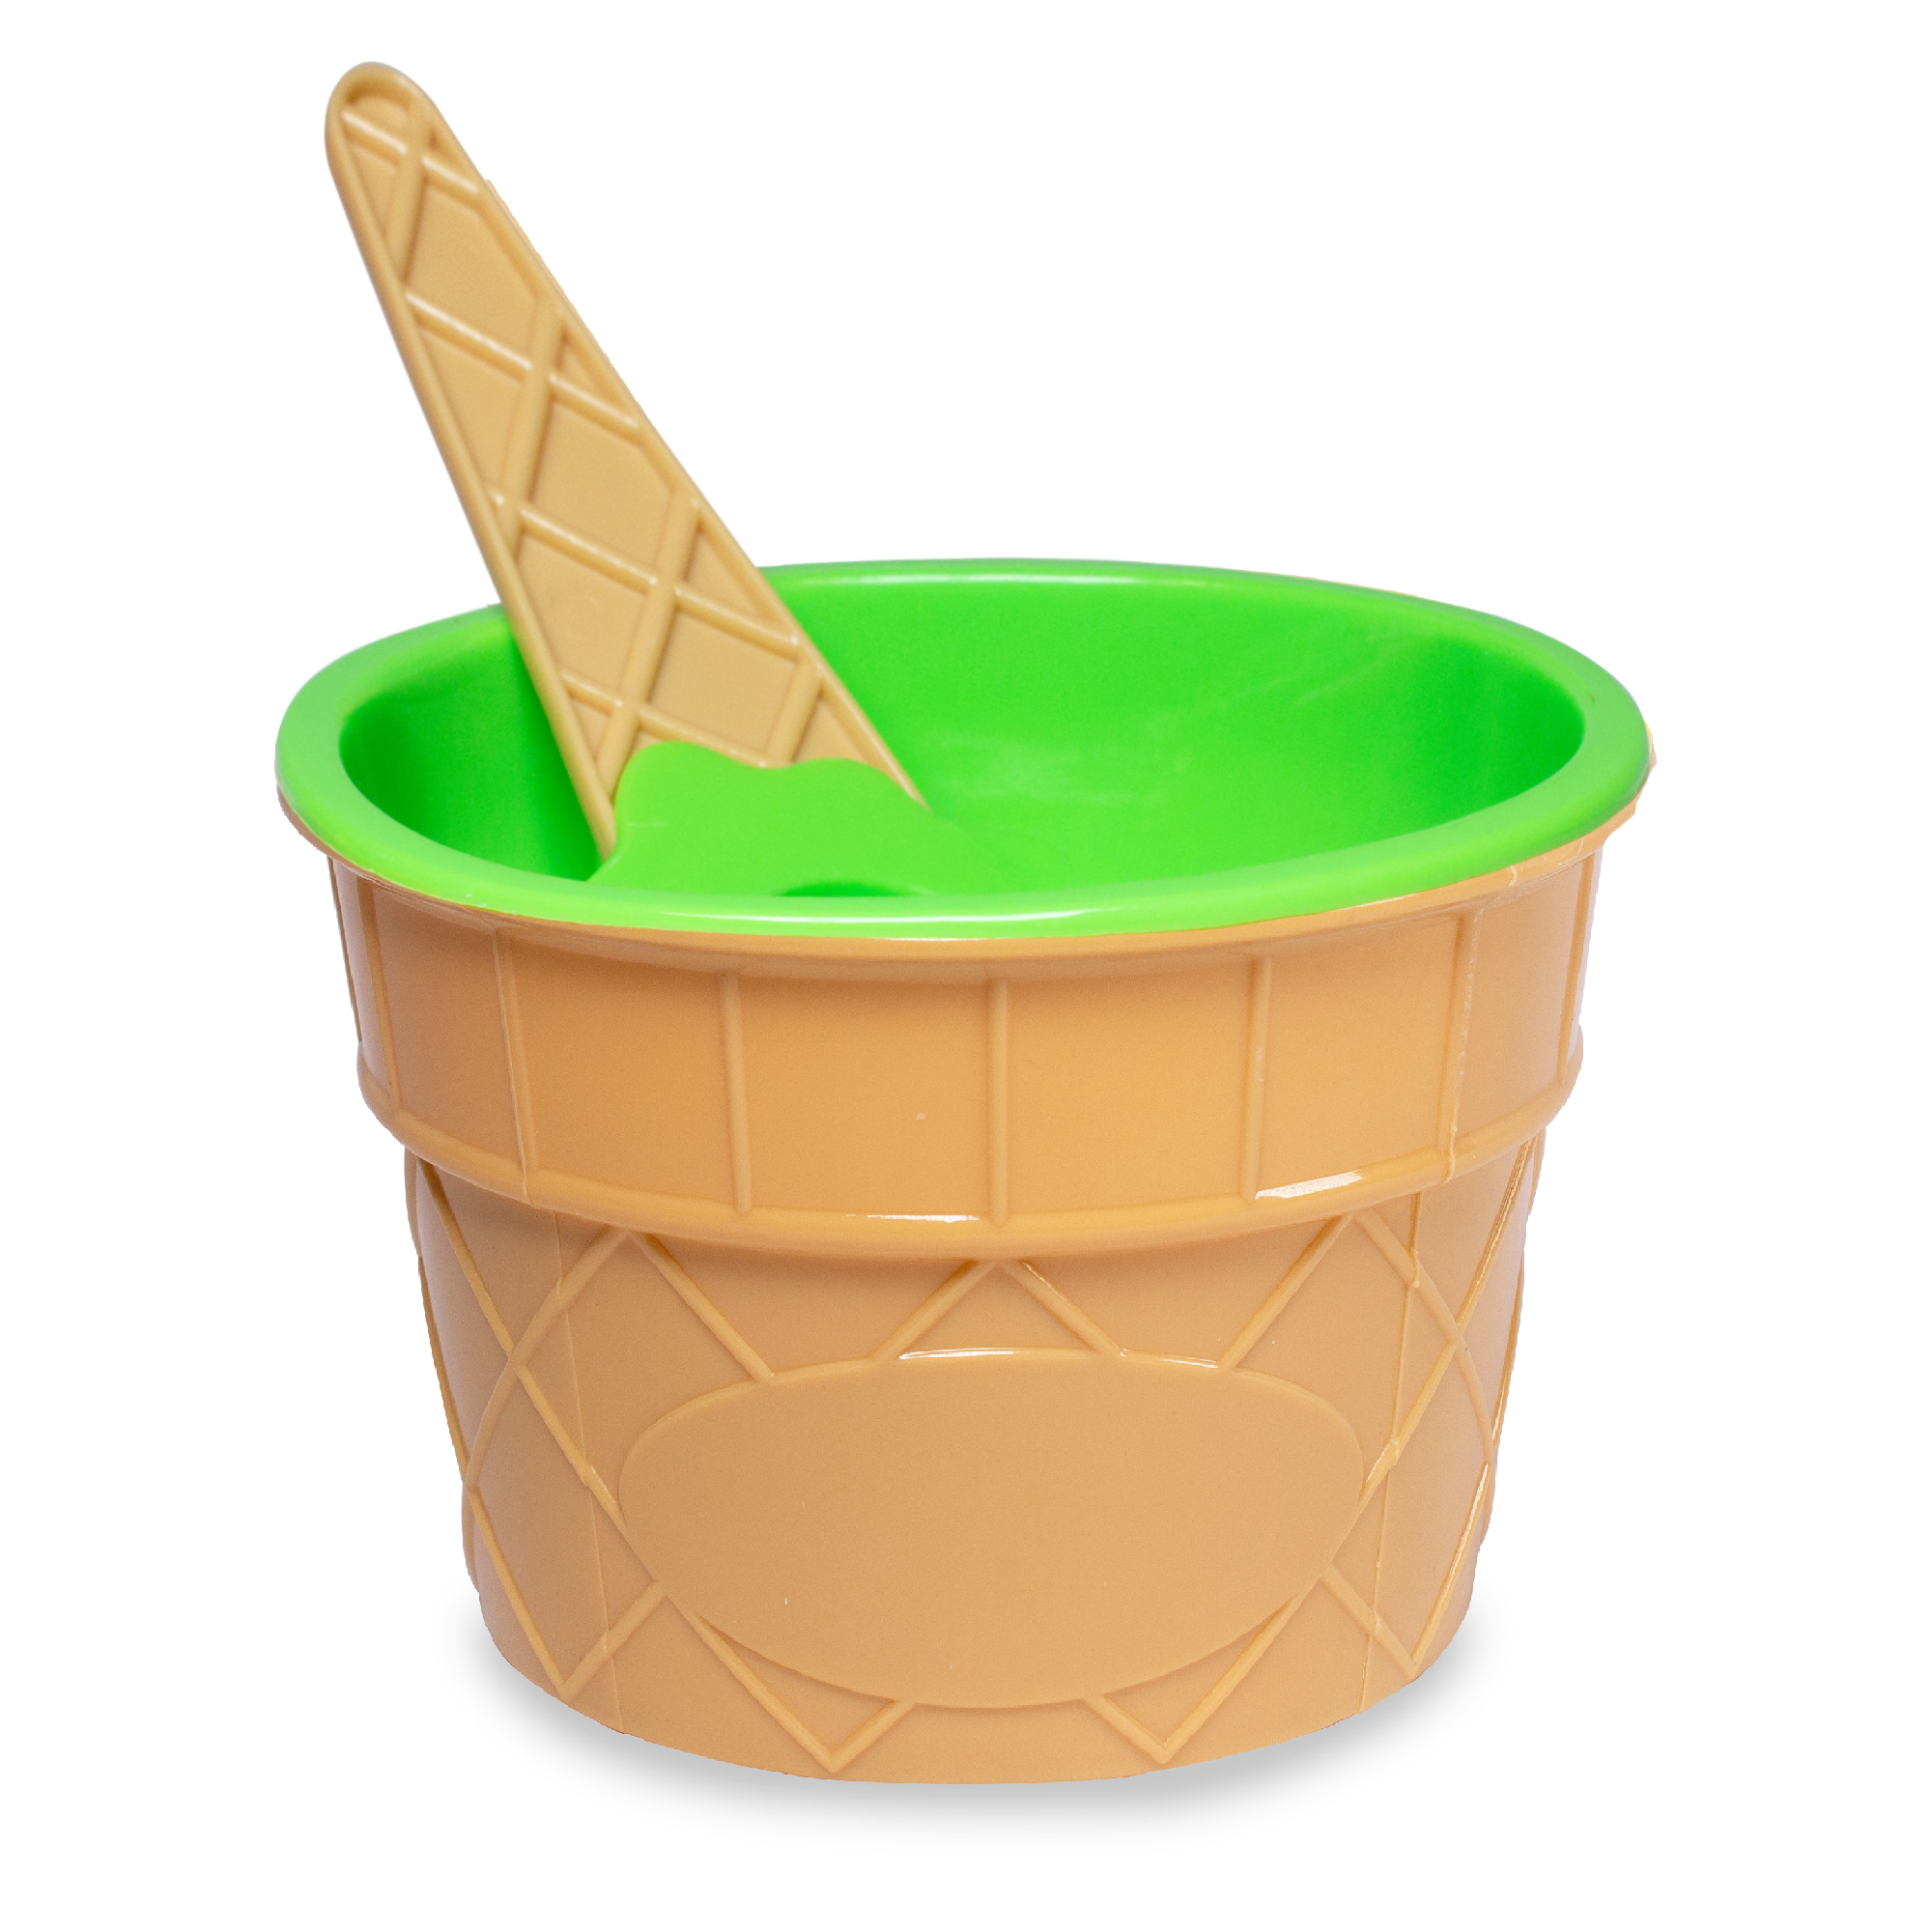 Green Ice Cream Bowl & Spoon Sets